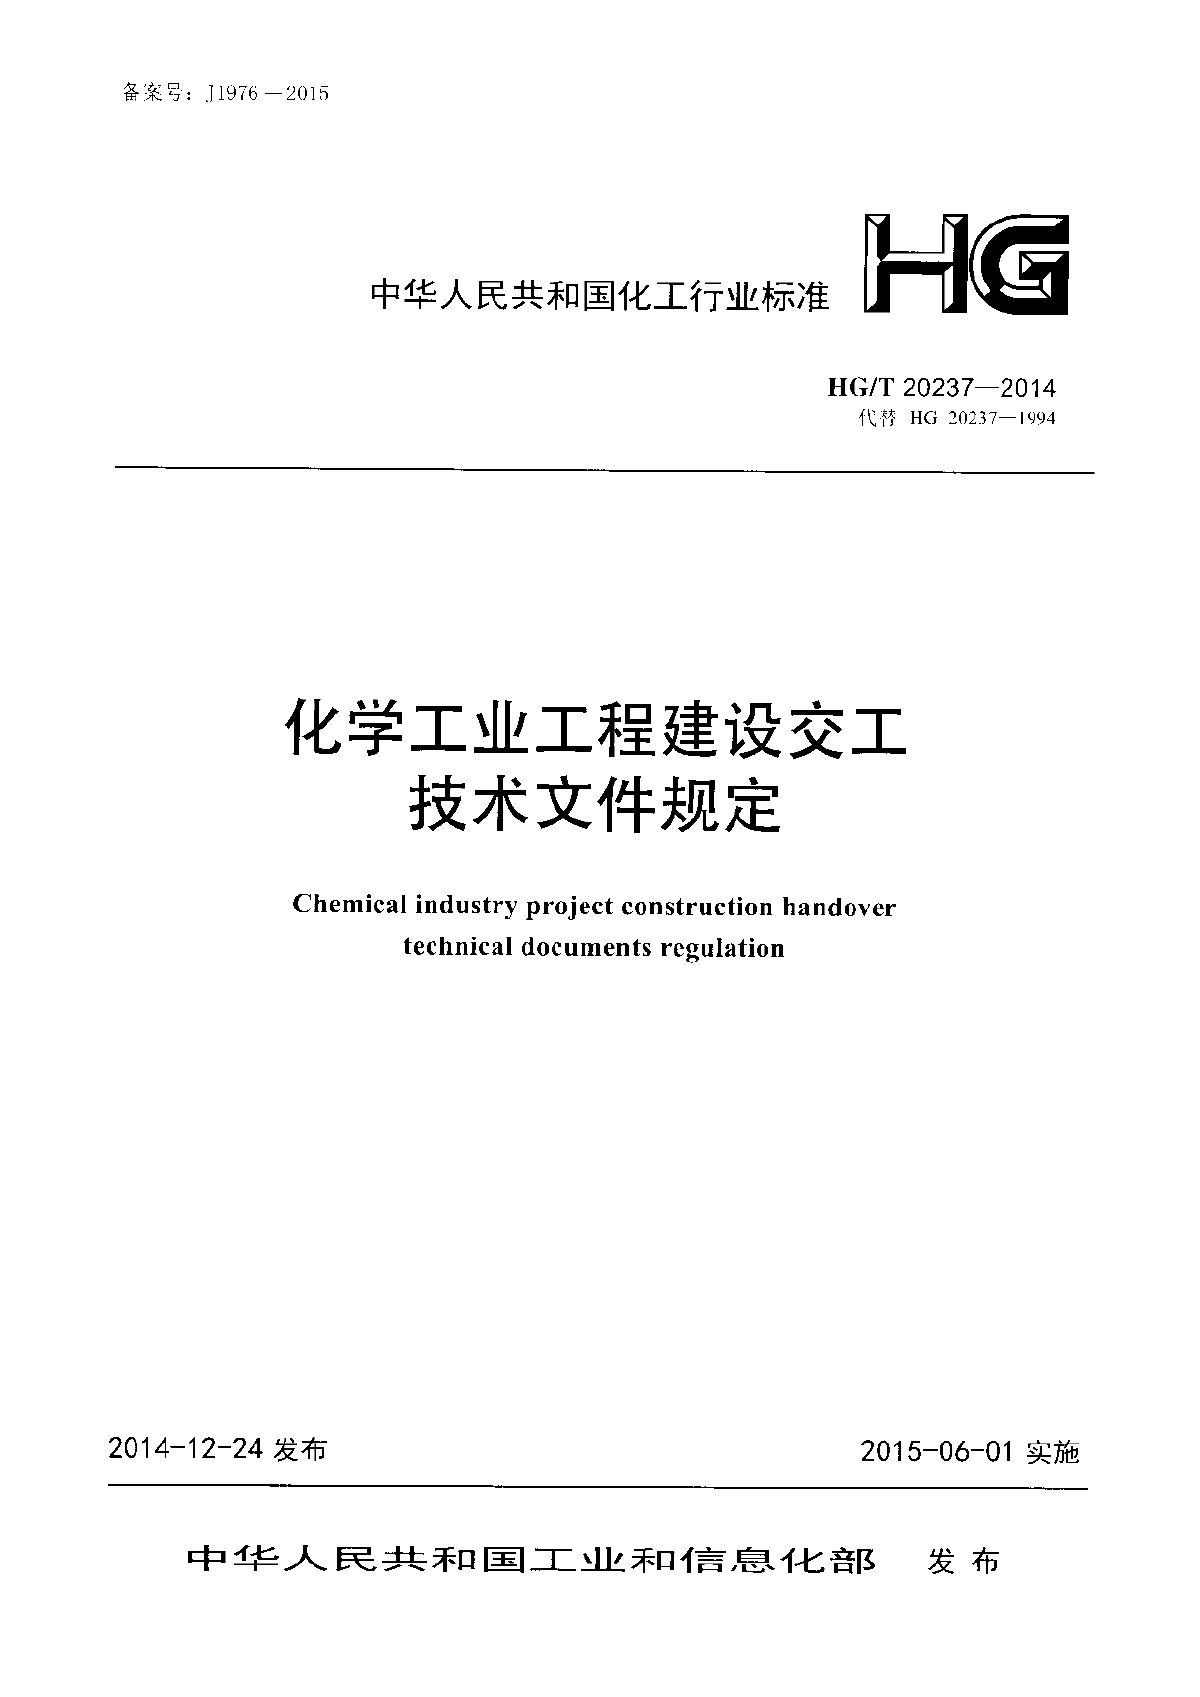 HG/T 20237-2014 化学工业工程建设交工技术文件规定-图一